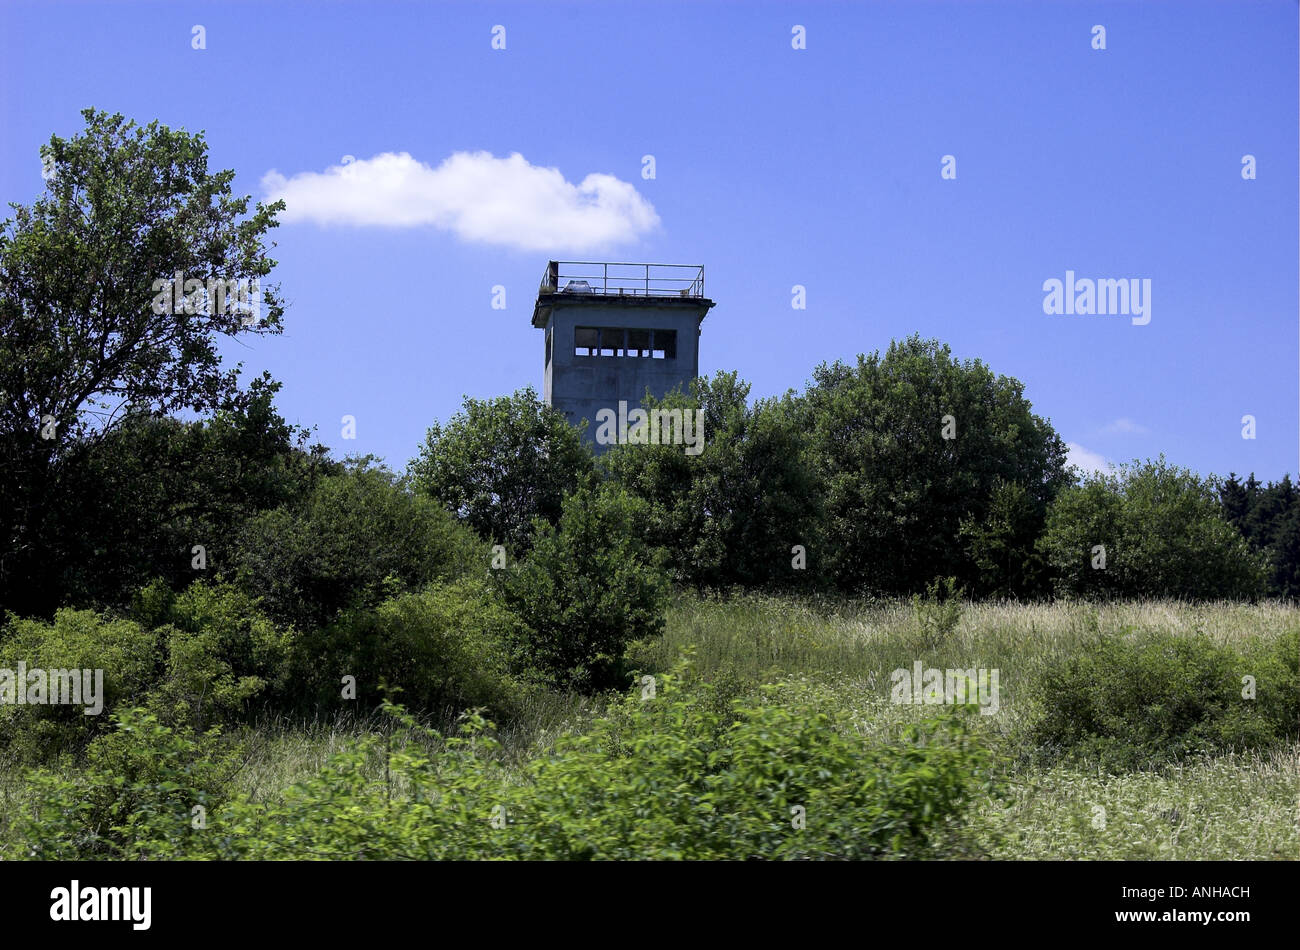 Berlin wall ，Germany， border wall ，watch tower Stock Photo